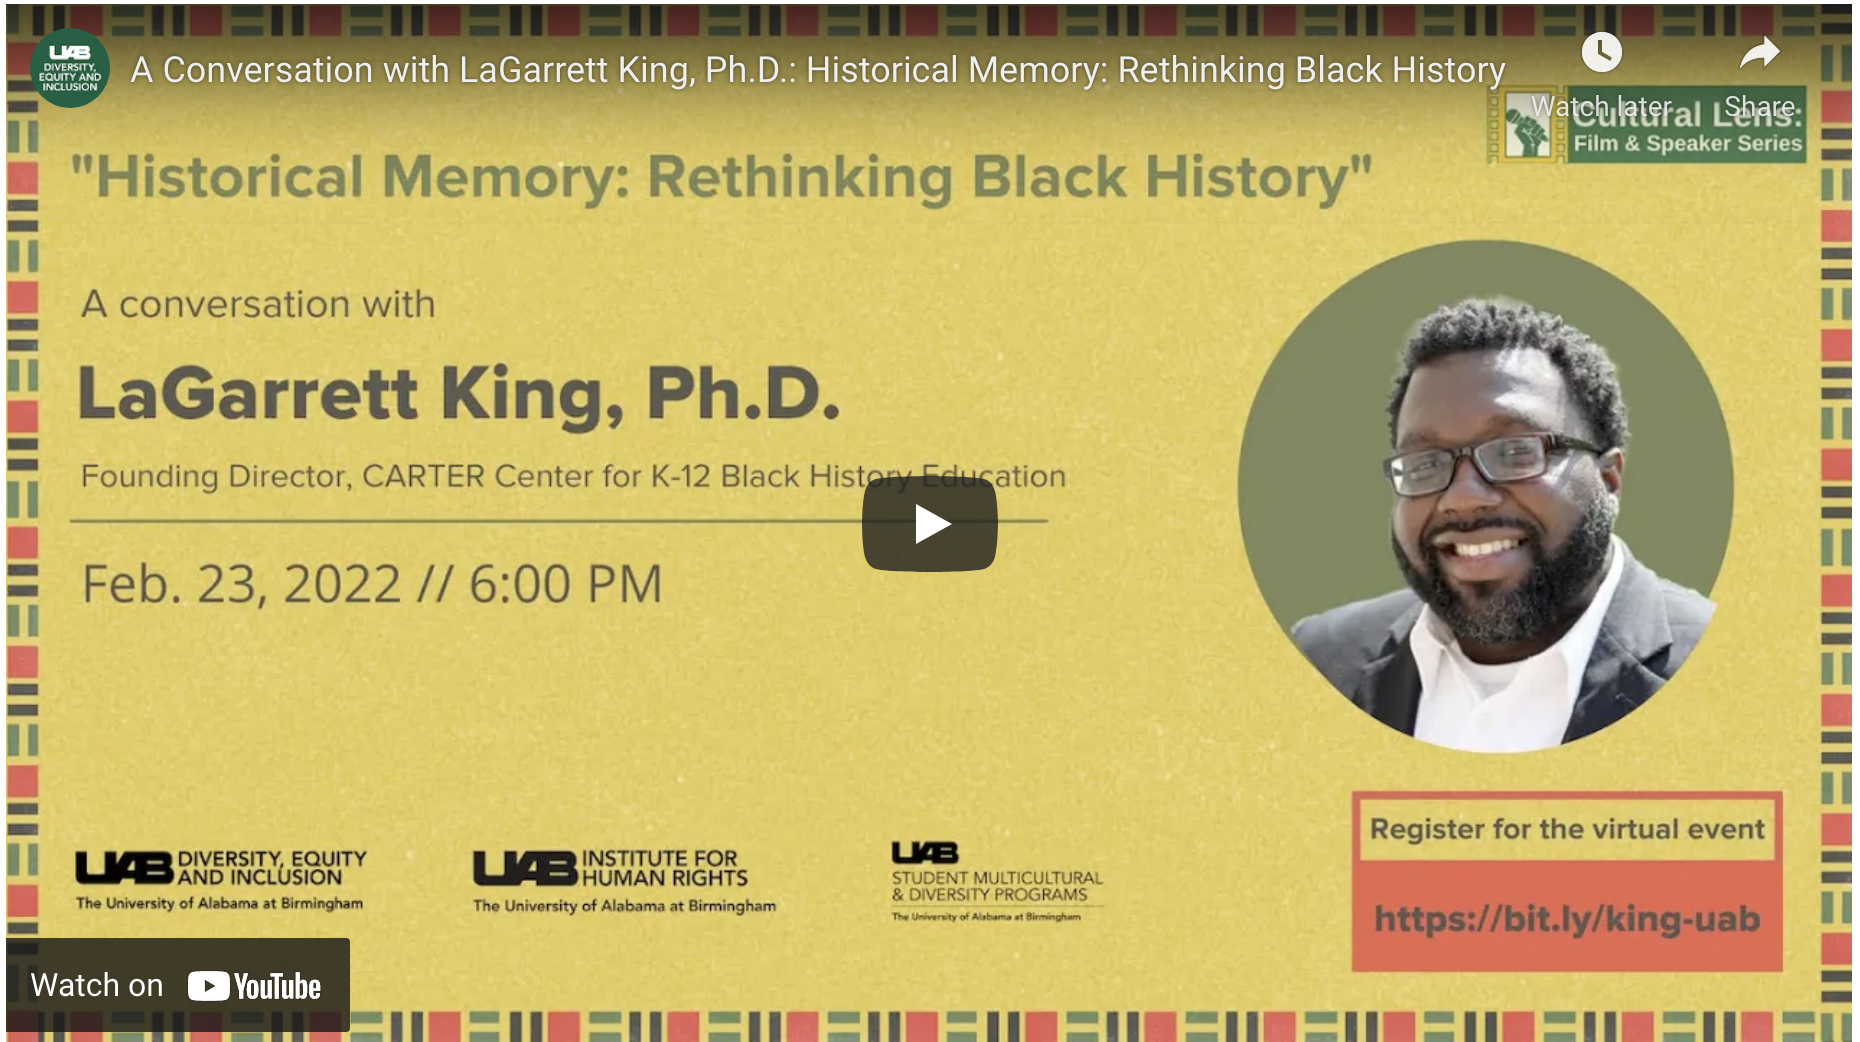 A Conversation with LaGarrett King, Ph.D.: Historical Memory: Rethinking Black History